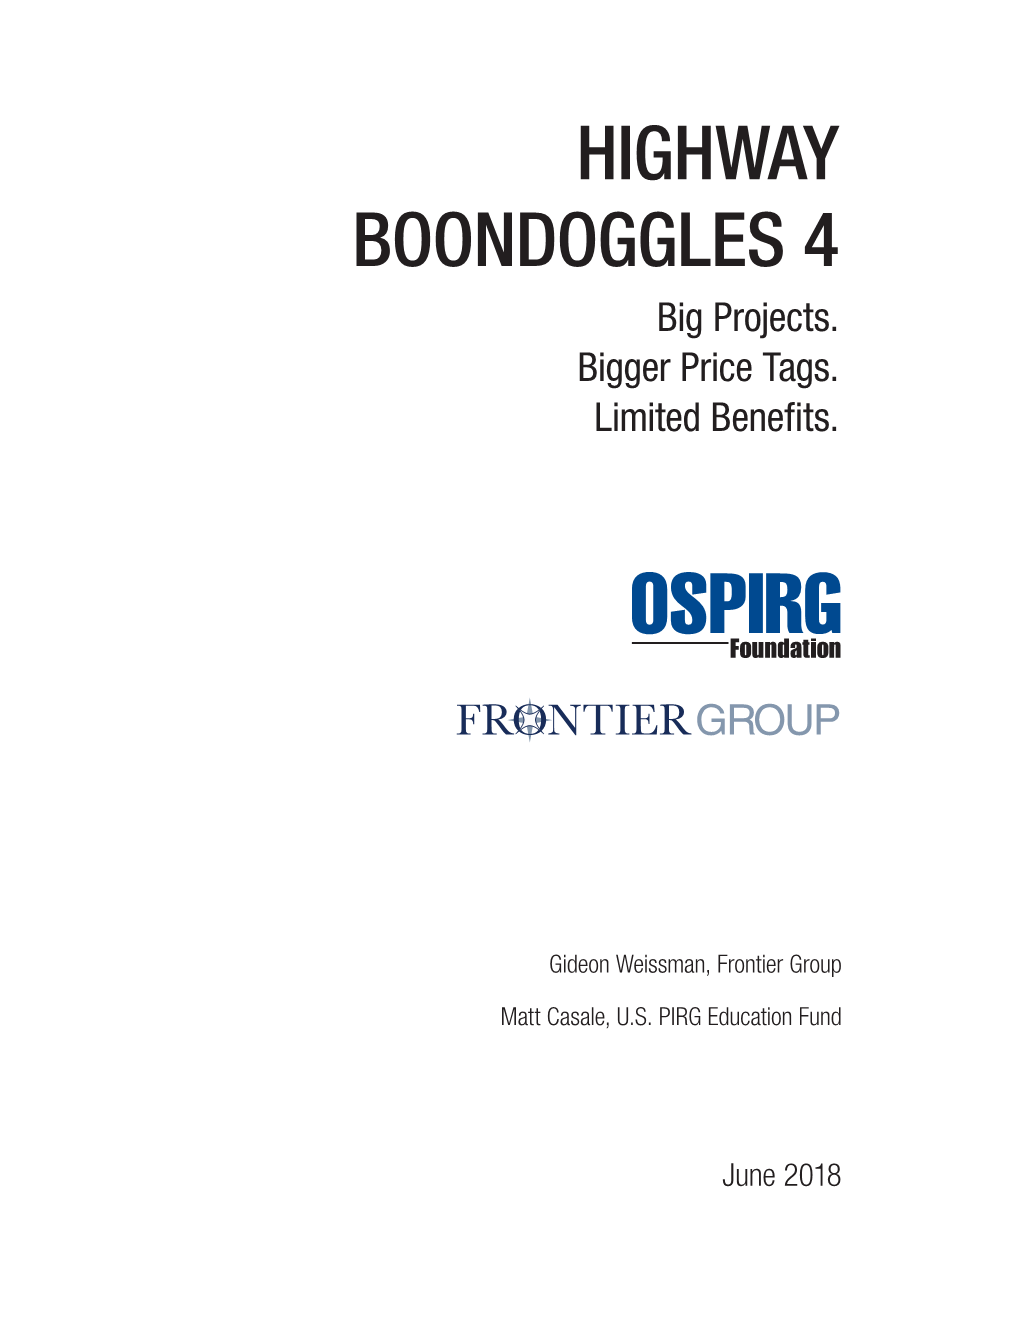 HIGHWAY BOONDOGGLES 4 Big Projects